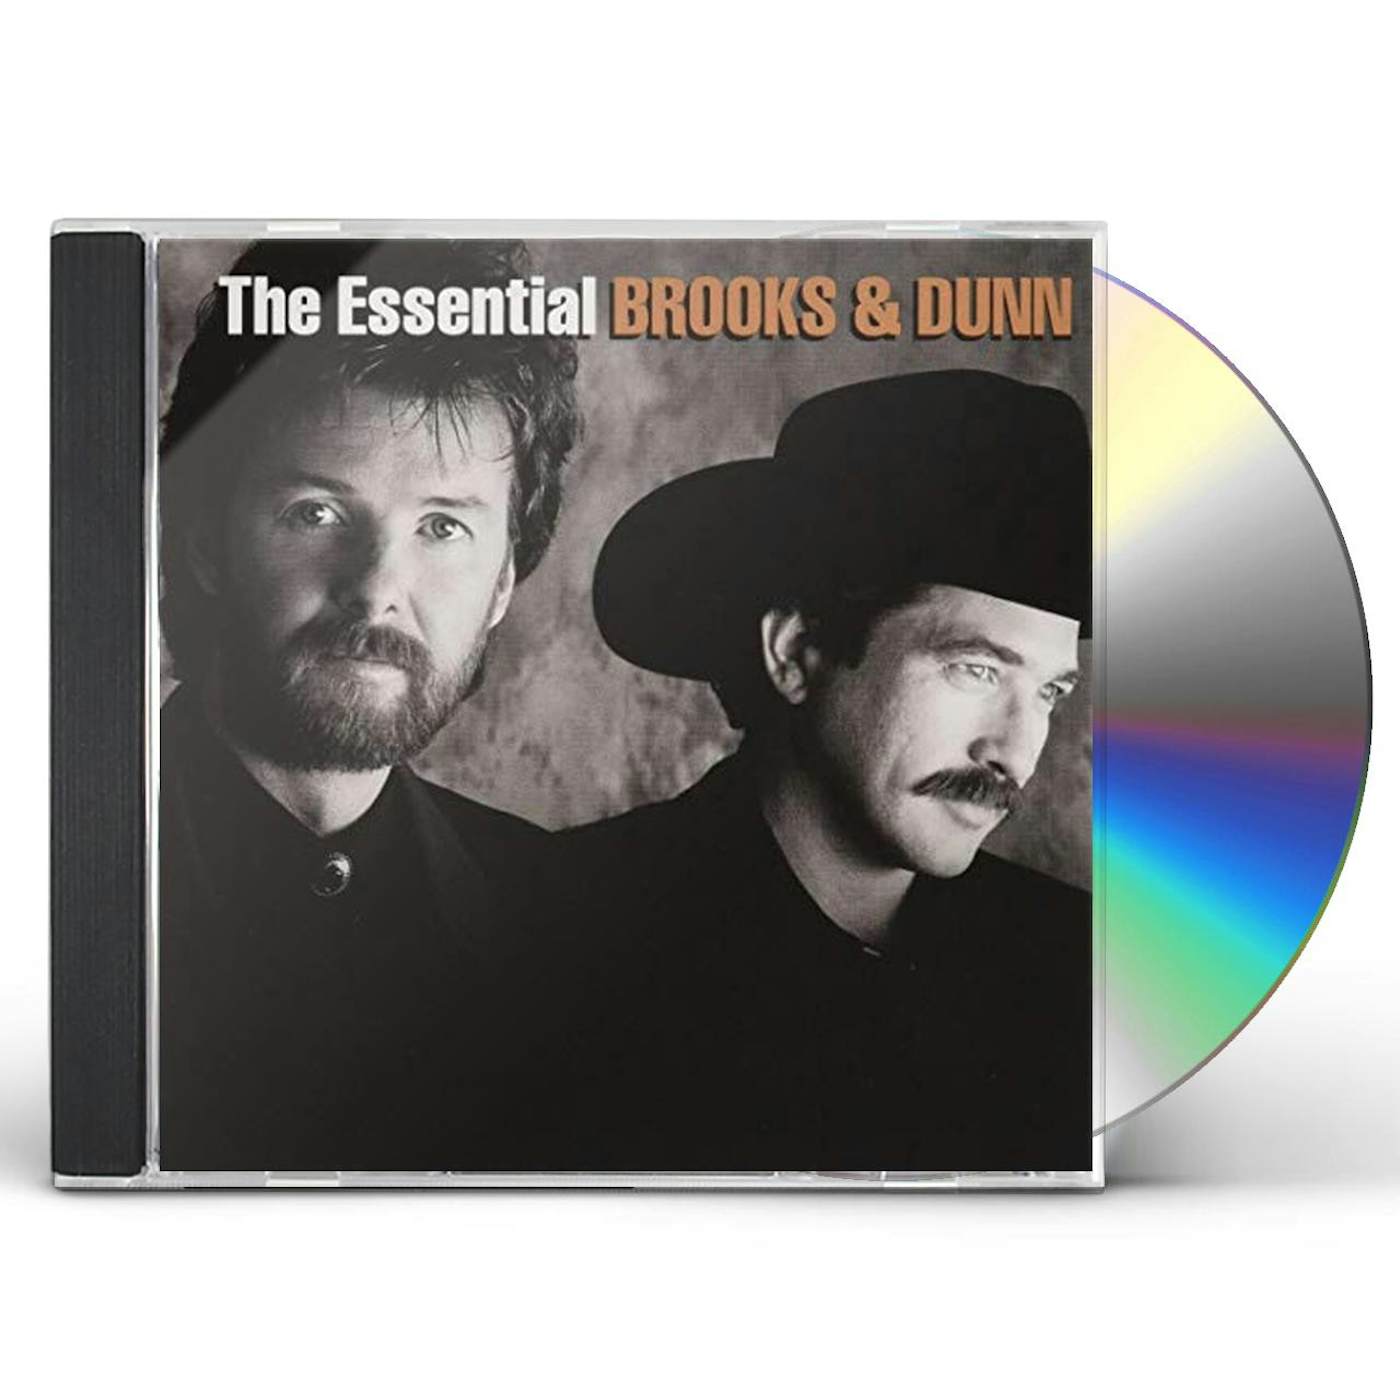 ESSENTIAL BROOKS & DUNN (GOLD SERIES) CD